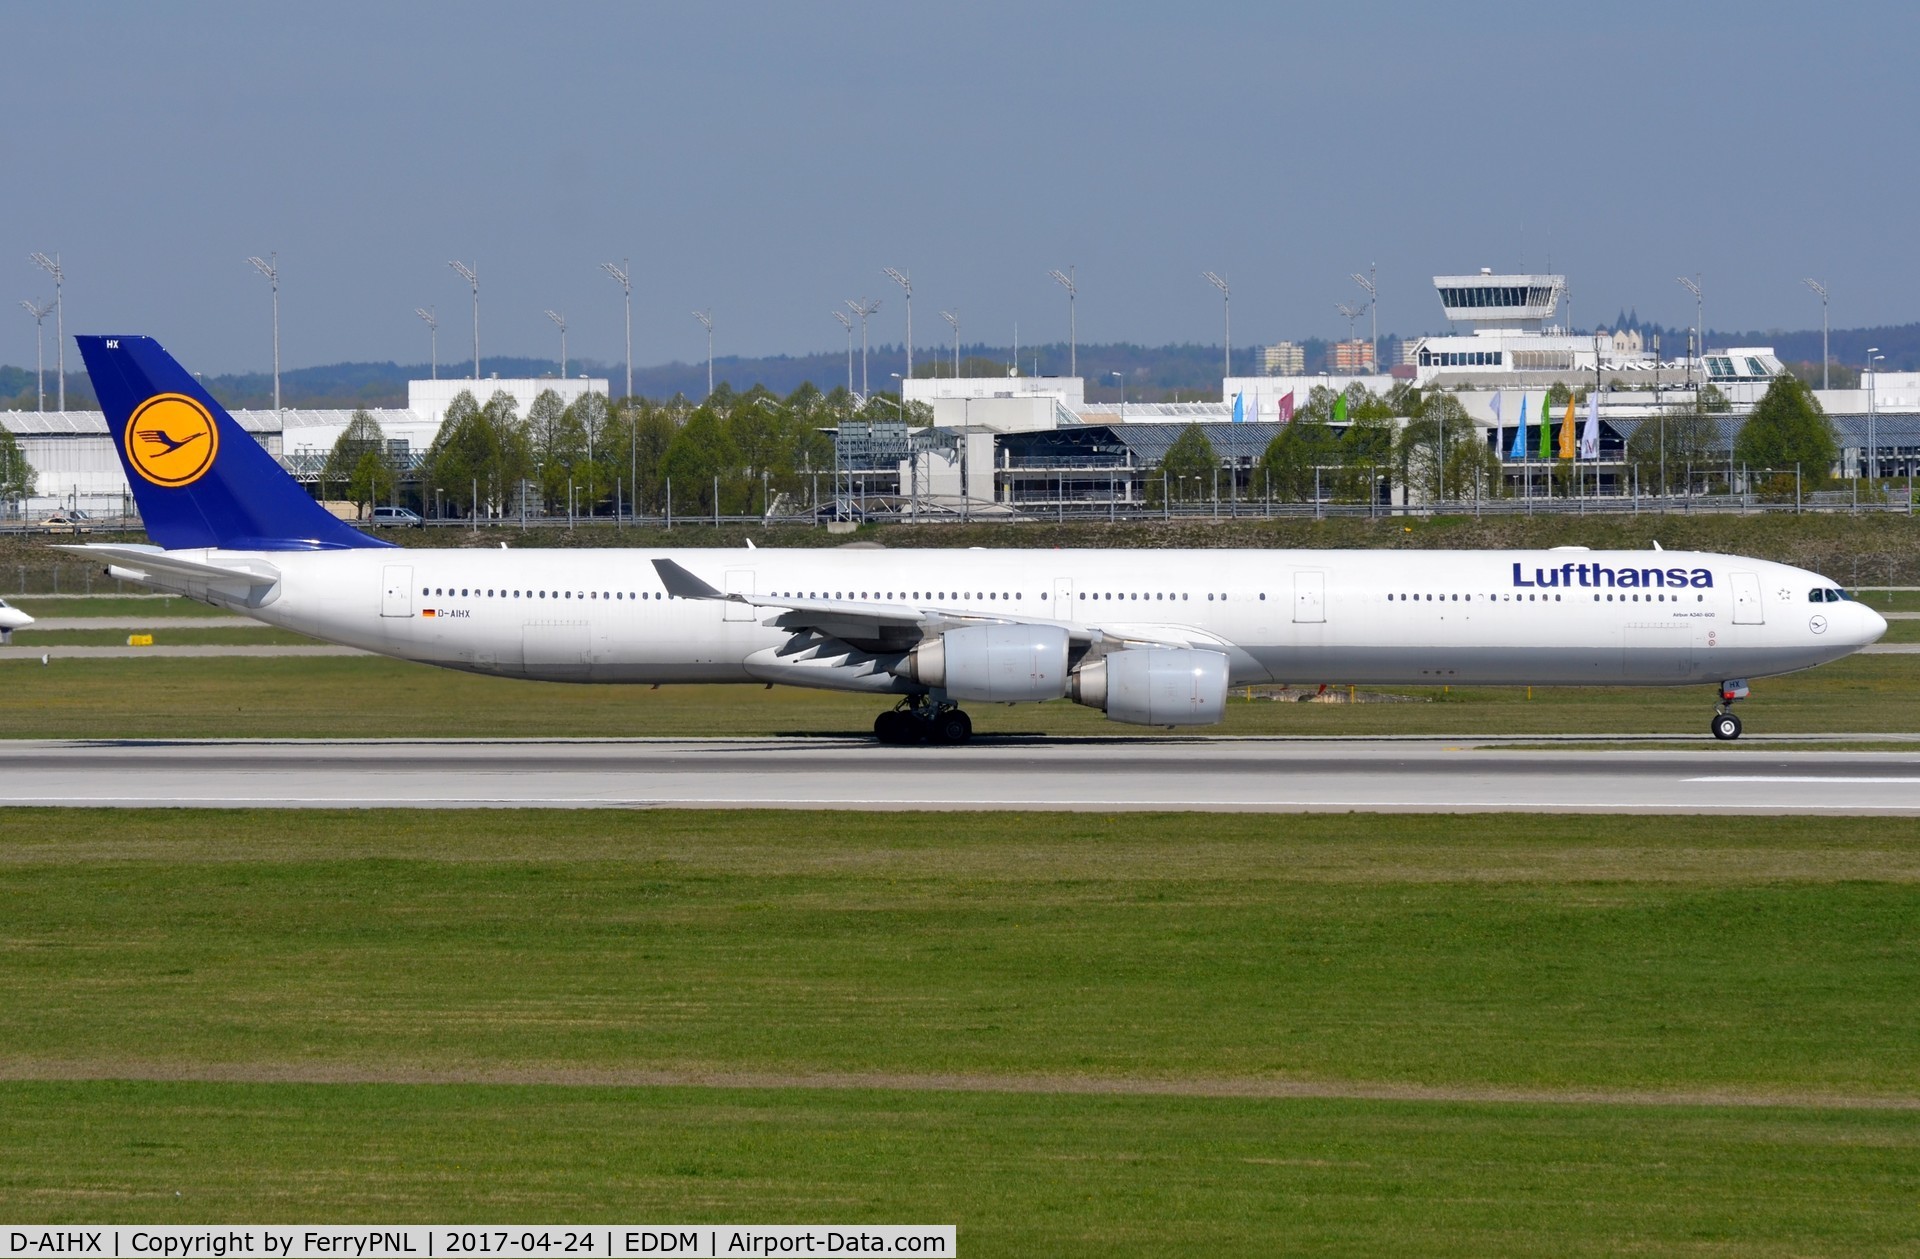 D-AIHX, 2009 Airbus A340-642 C/N 981, Lufthansa A346 just landed in MUC